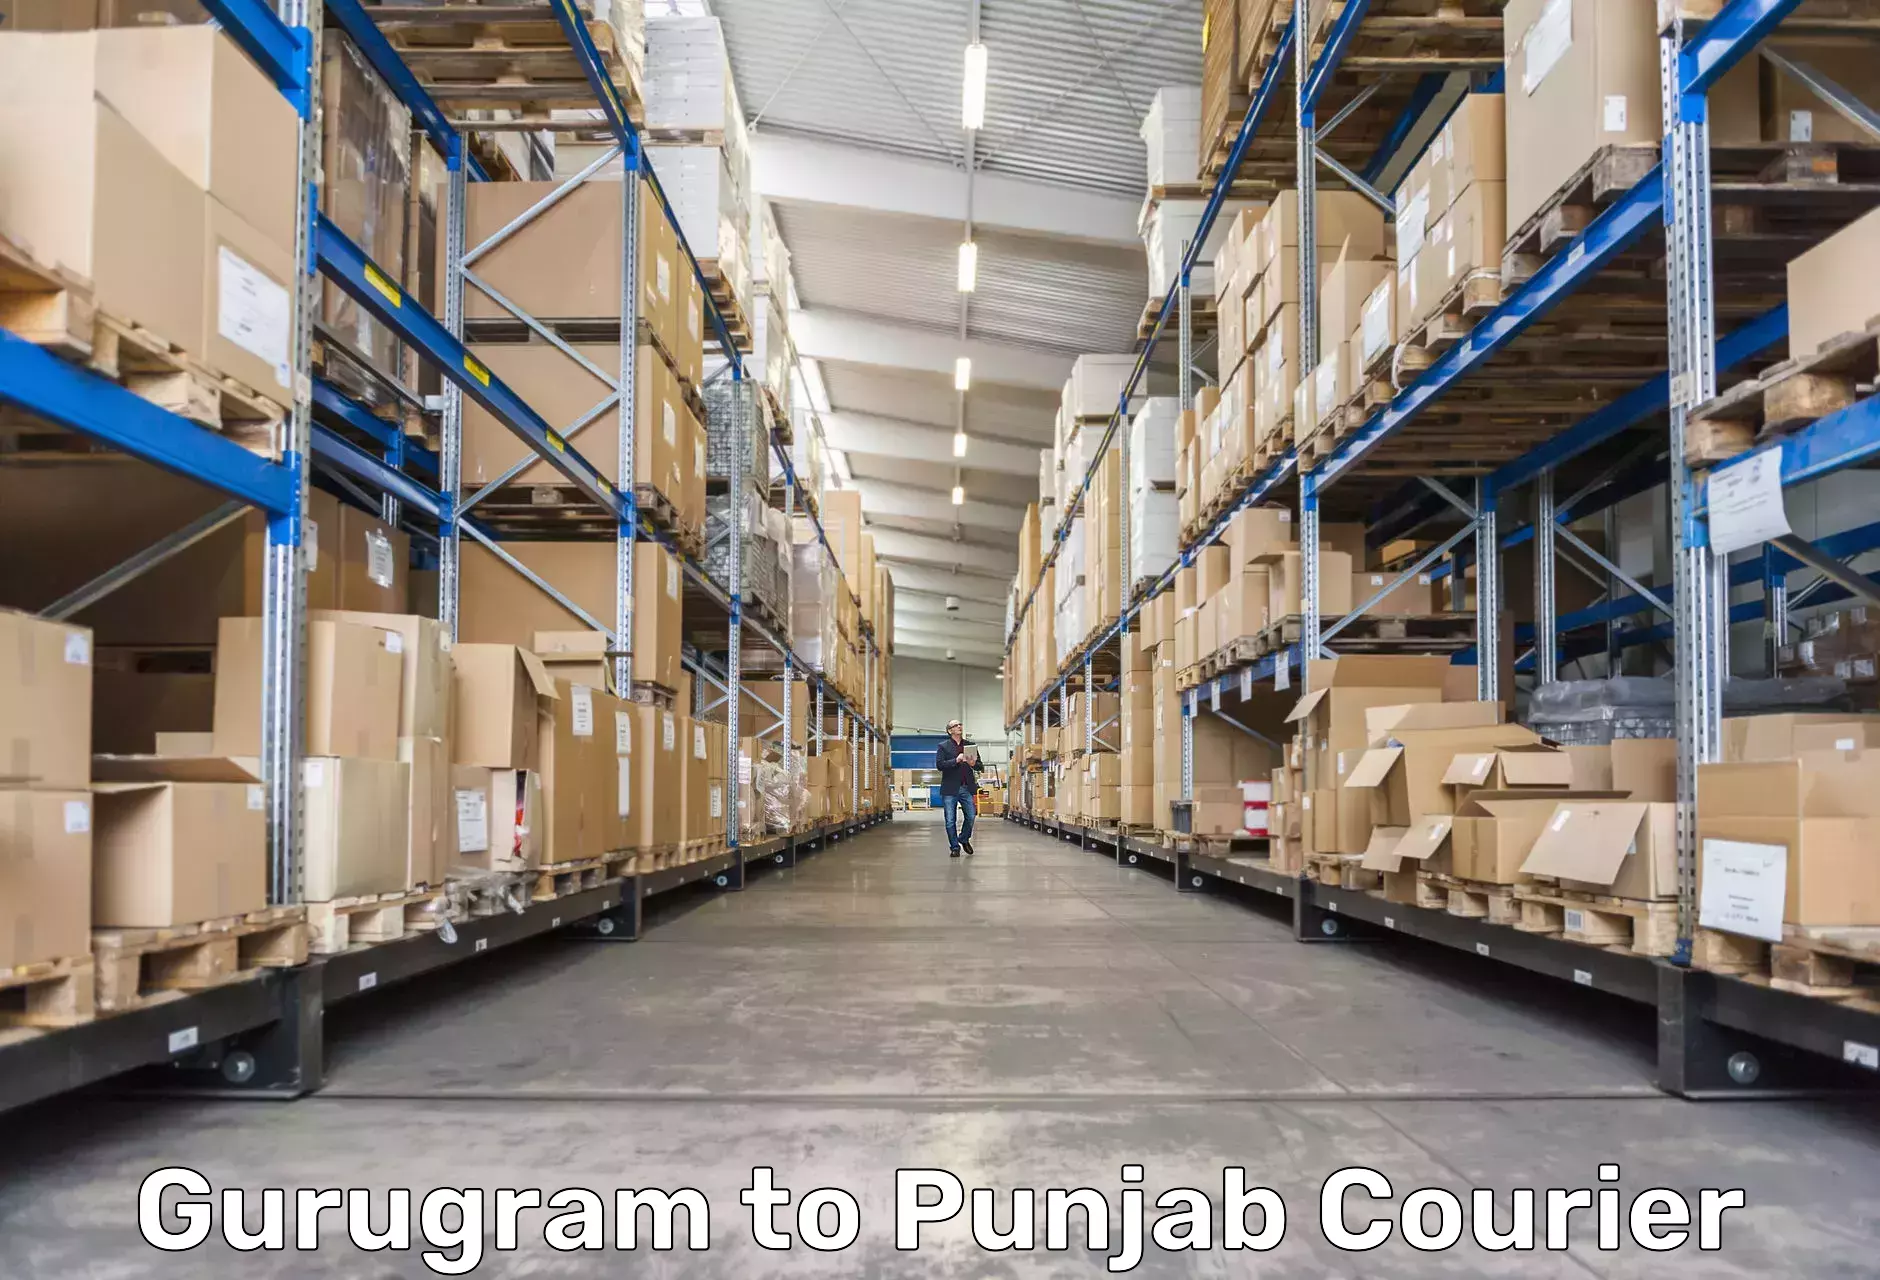 Courier app Gurugram to Punjab